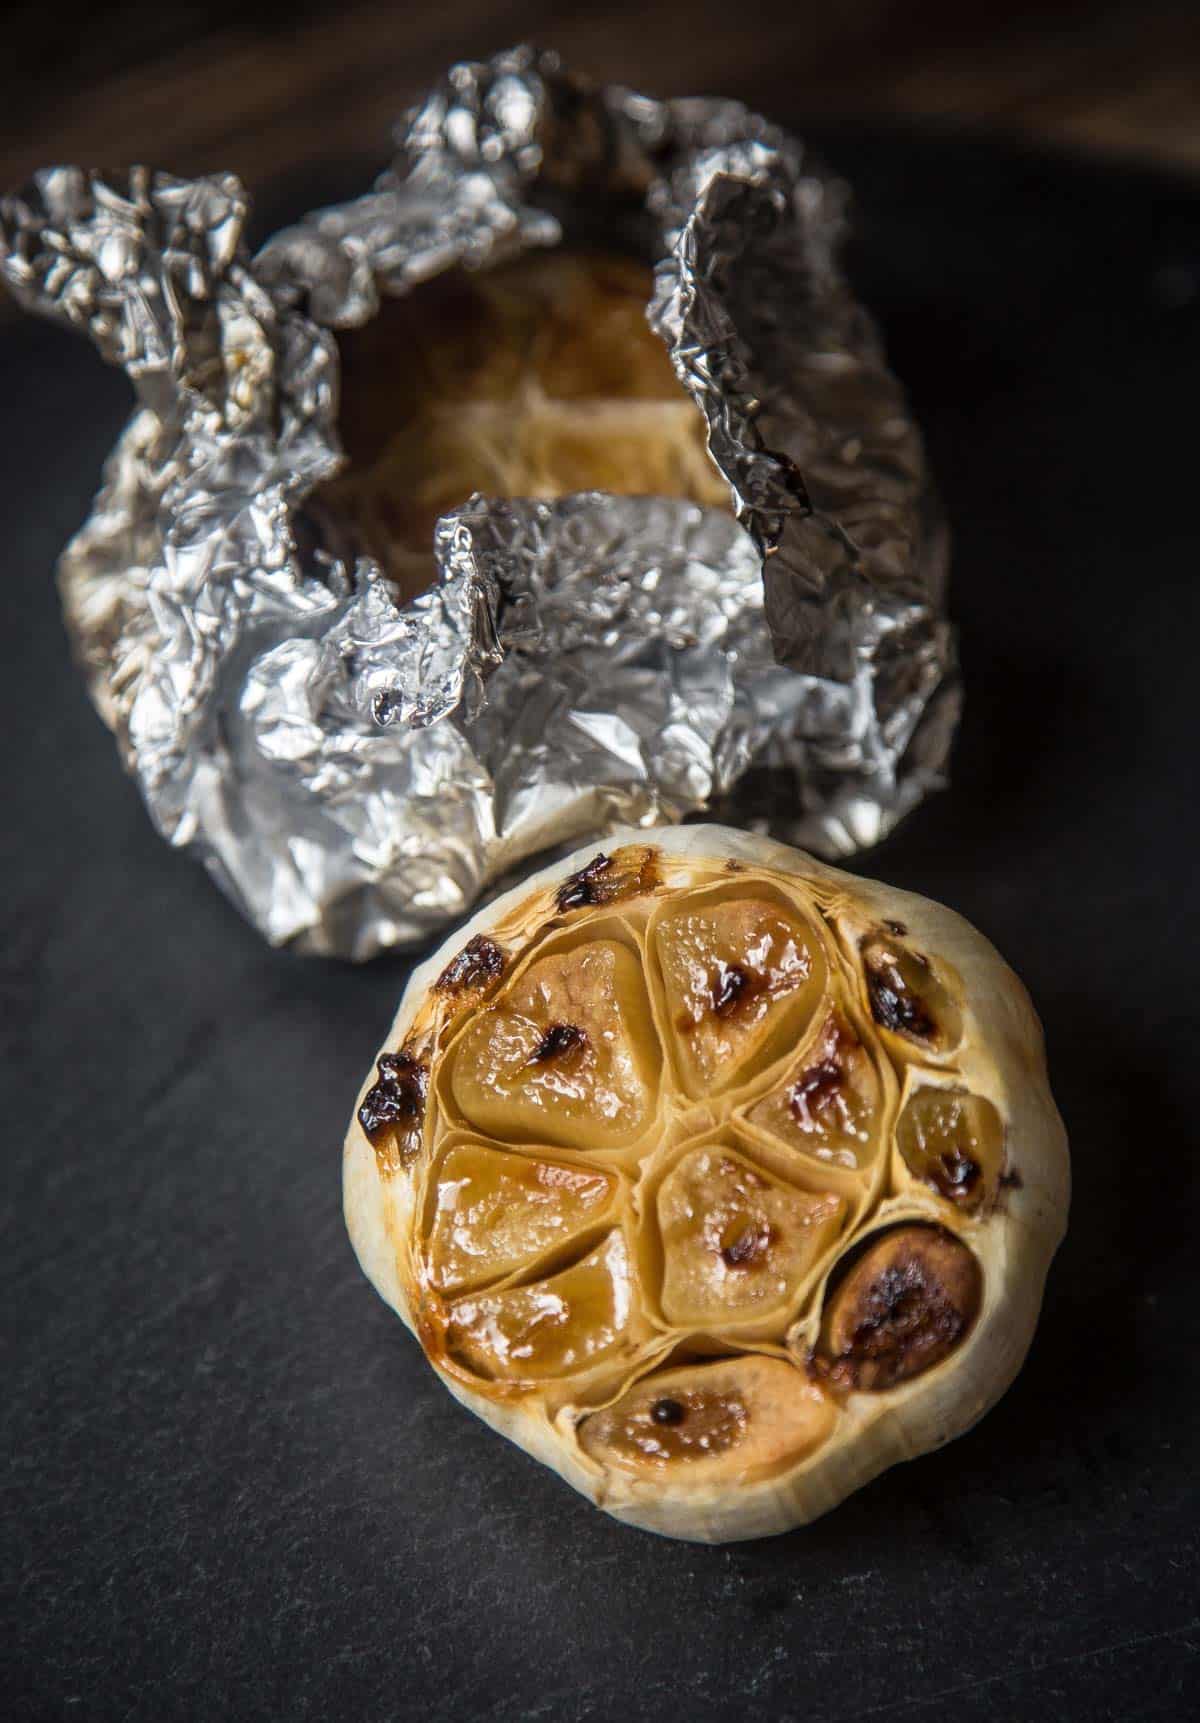 A roasted garlic bulb on a serving platter